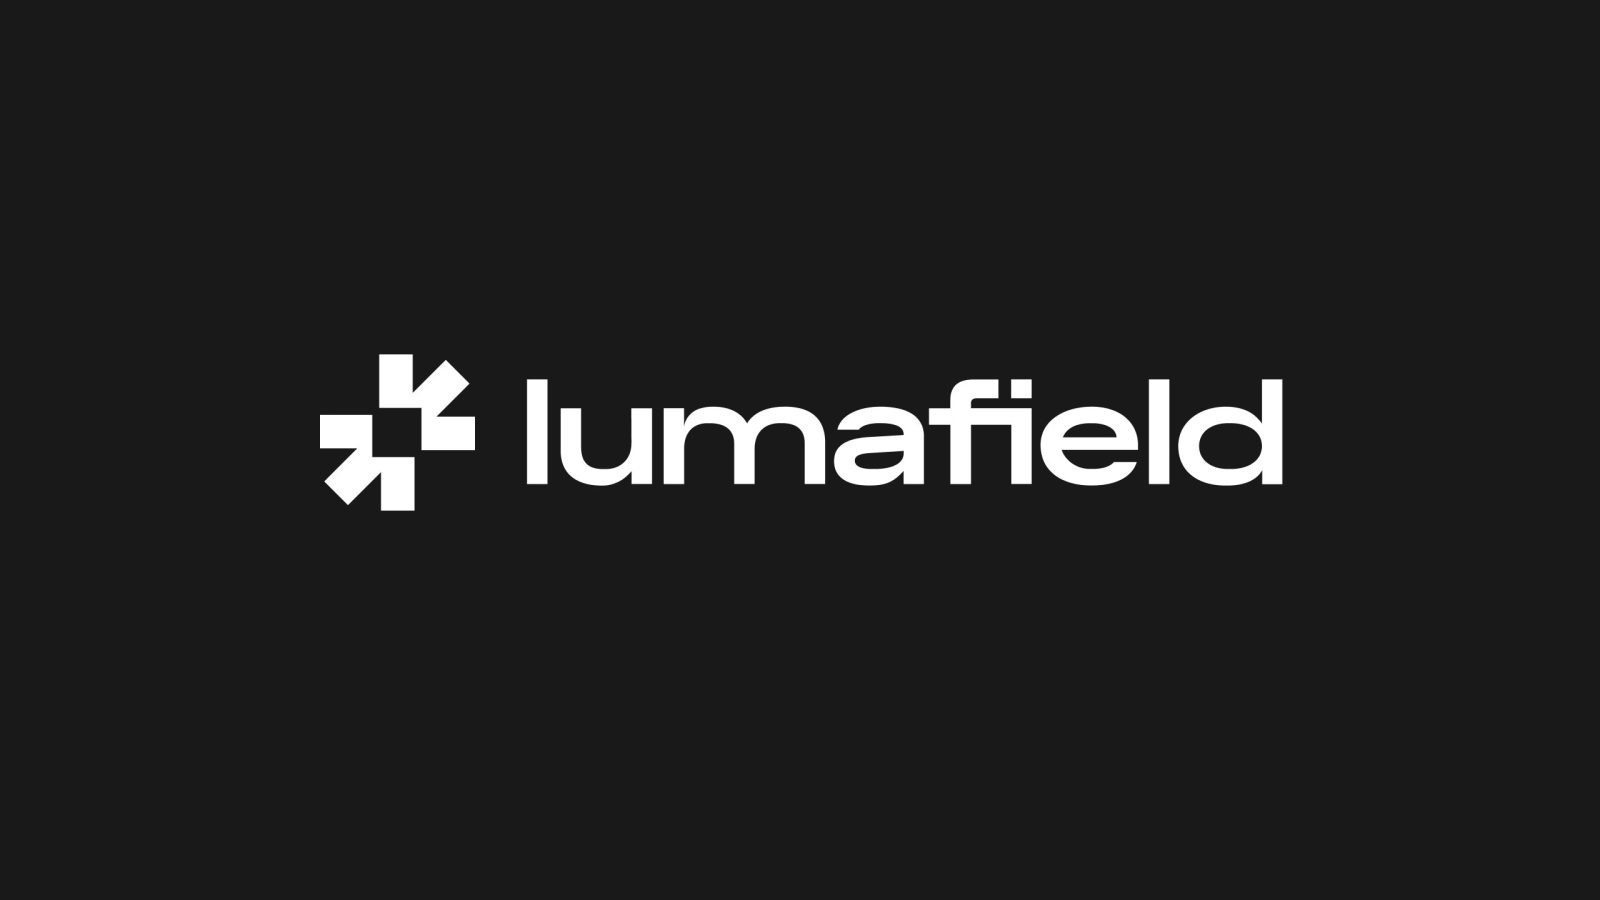 Lumafield Brand Design